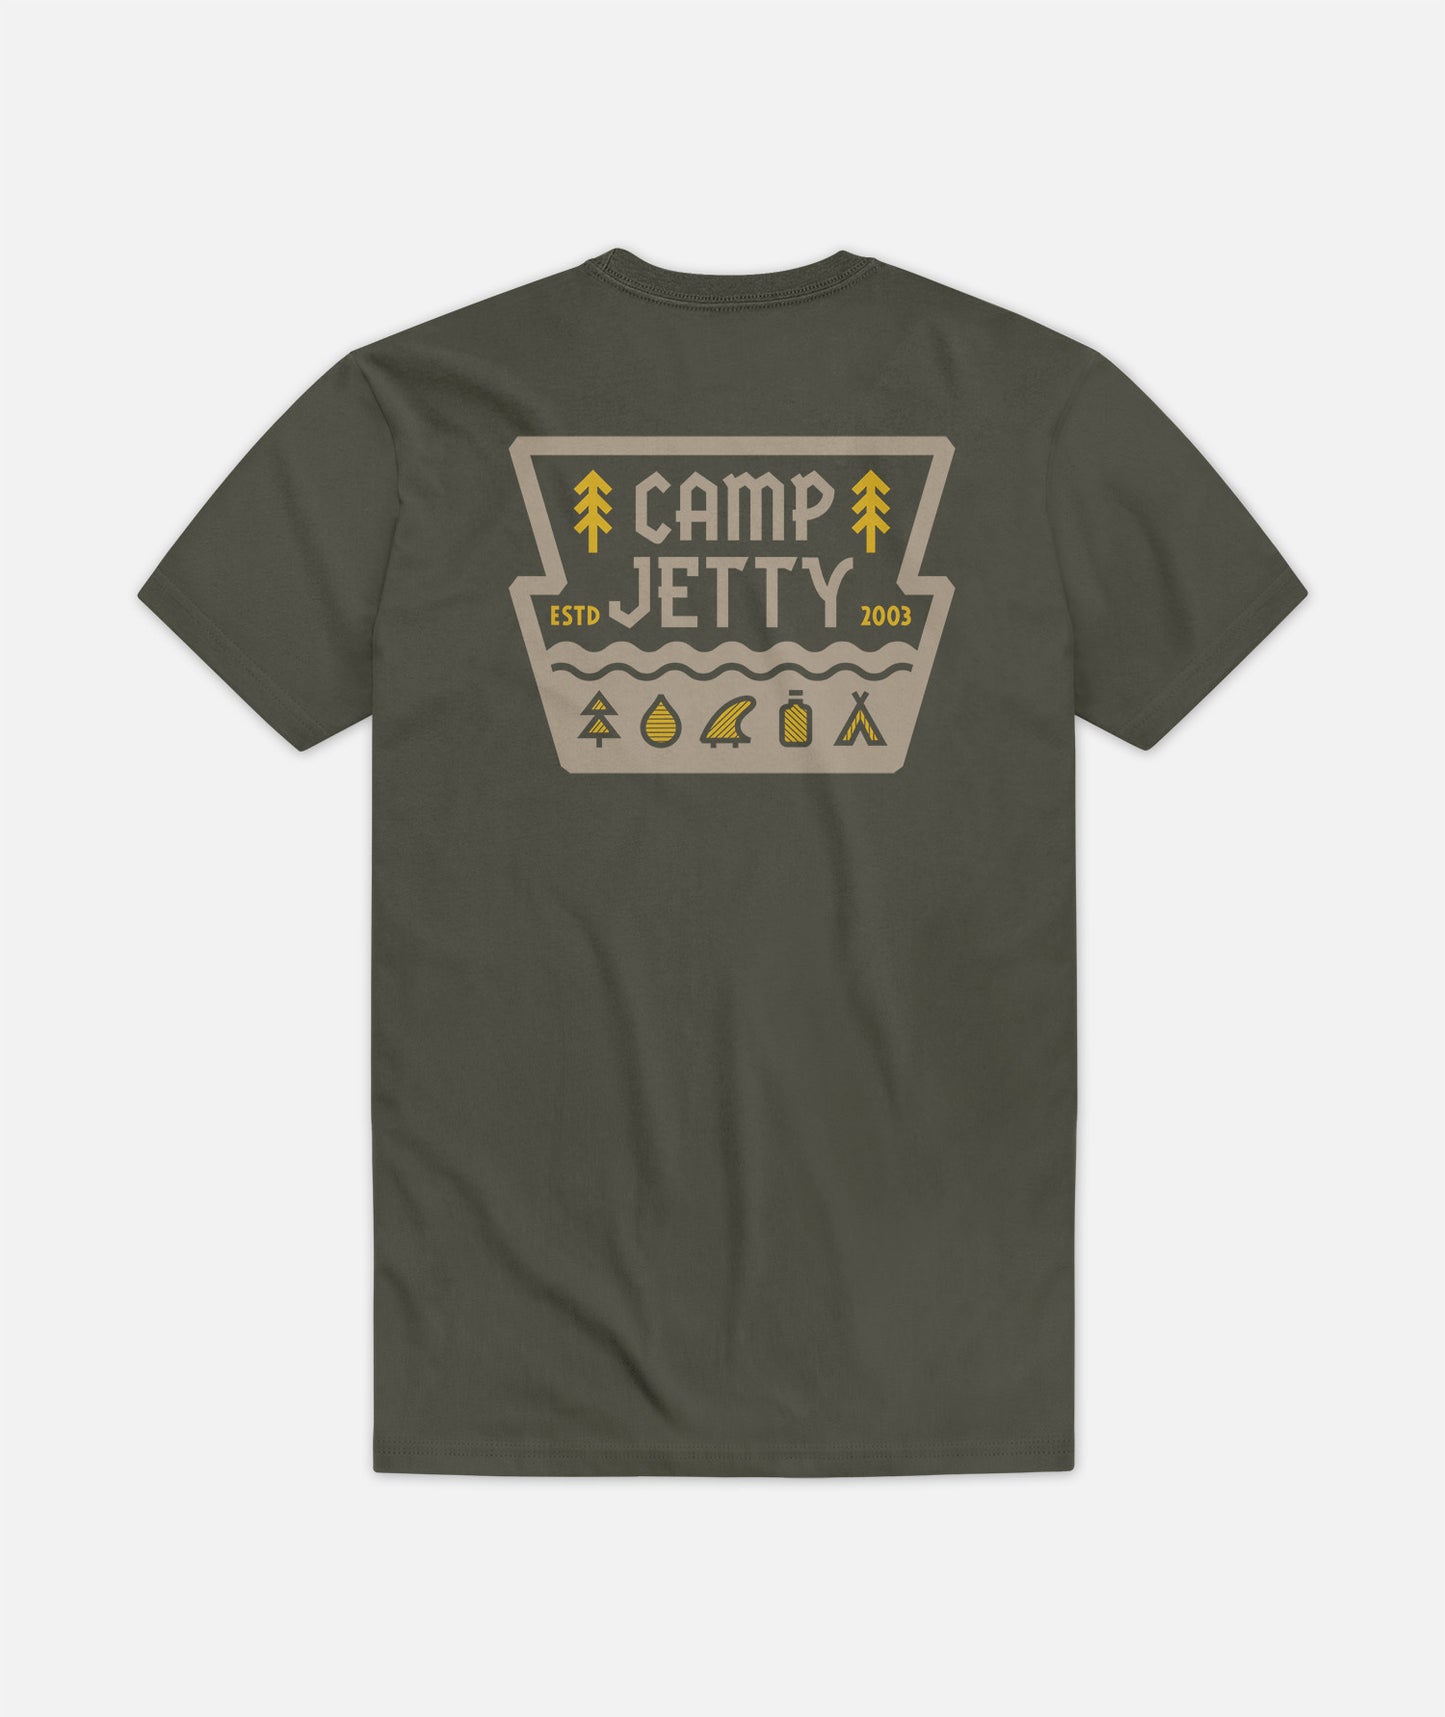 Camper Tee - Military